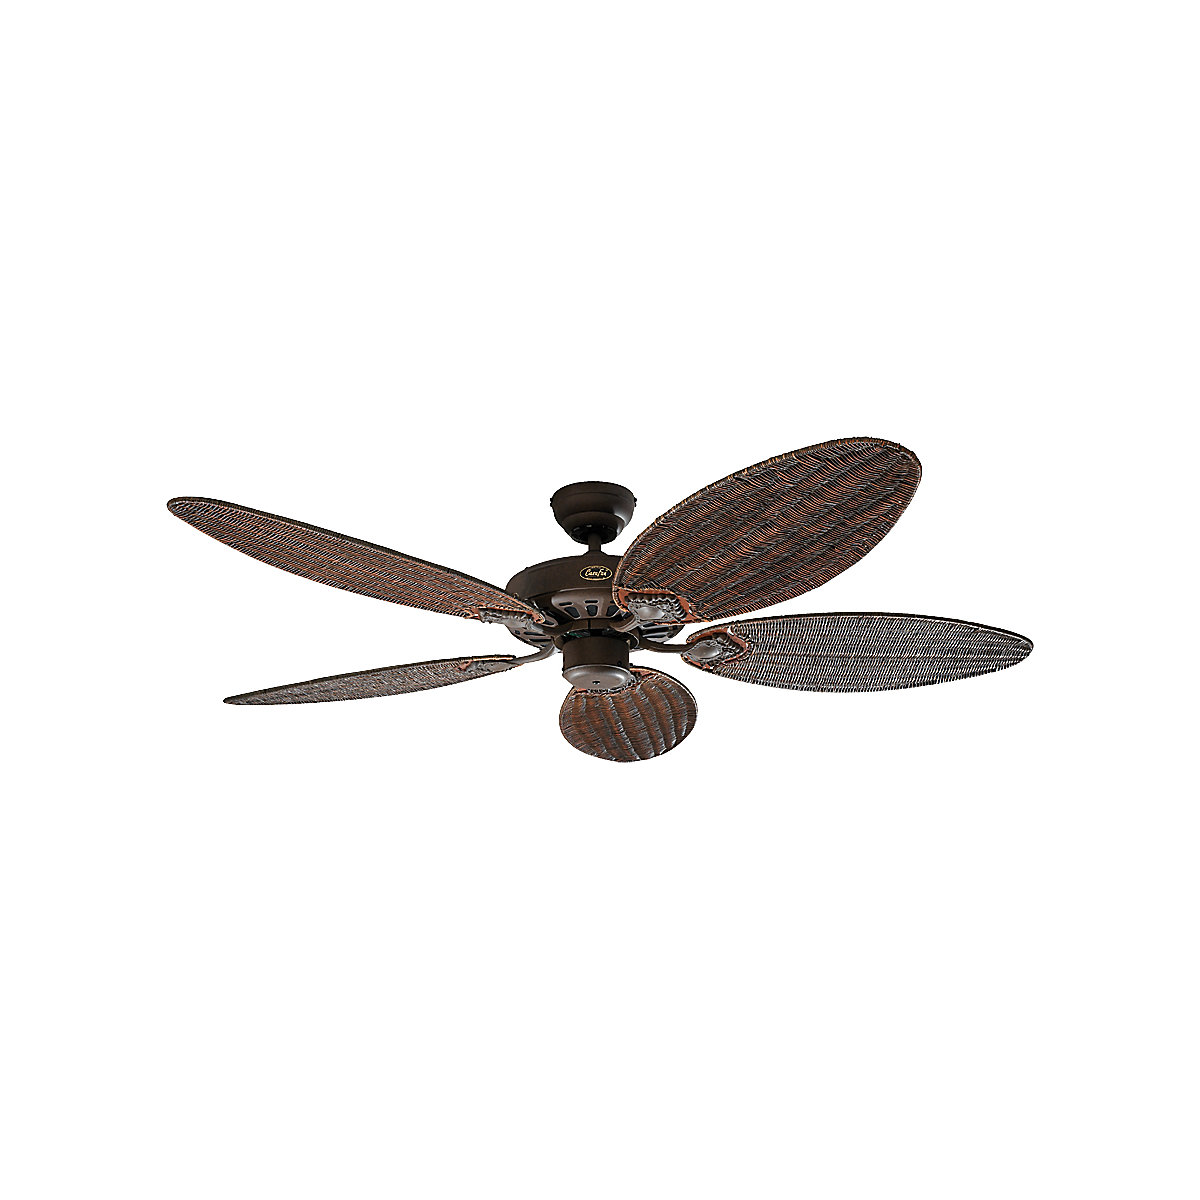 Plafondventilator CLASSIC ROYAL, propellerblad-Ø 1320 mm, ovaal, antiek rotan / antiek bruin / brons